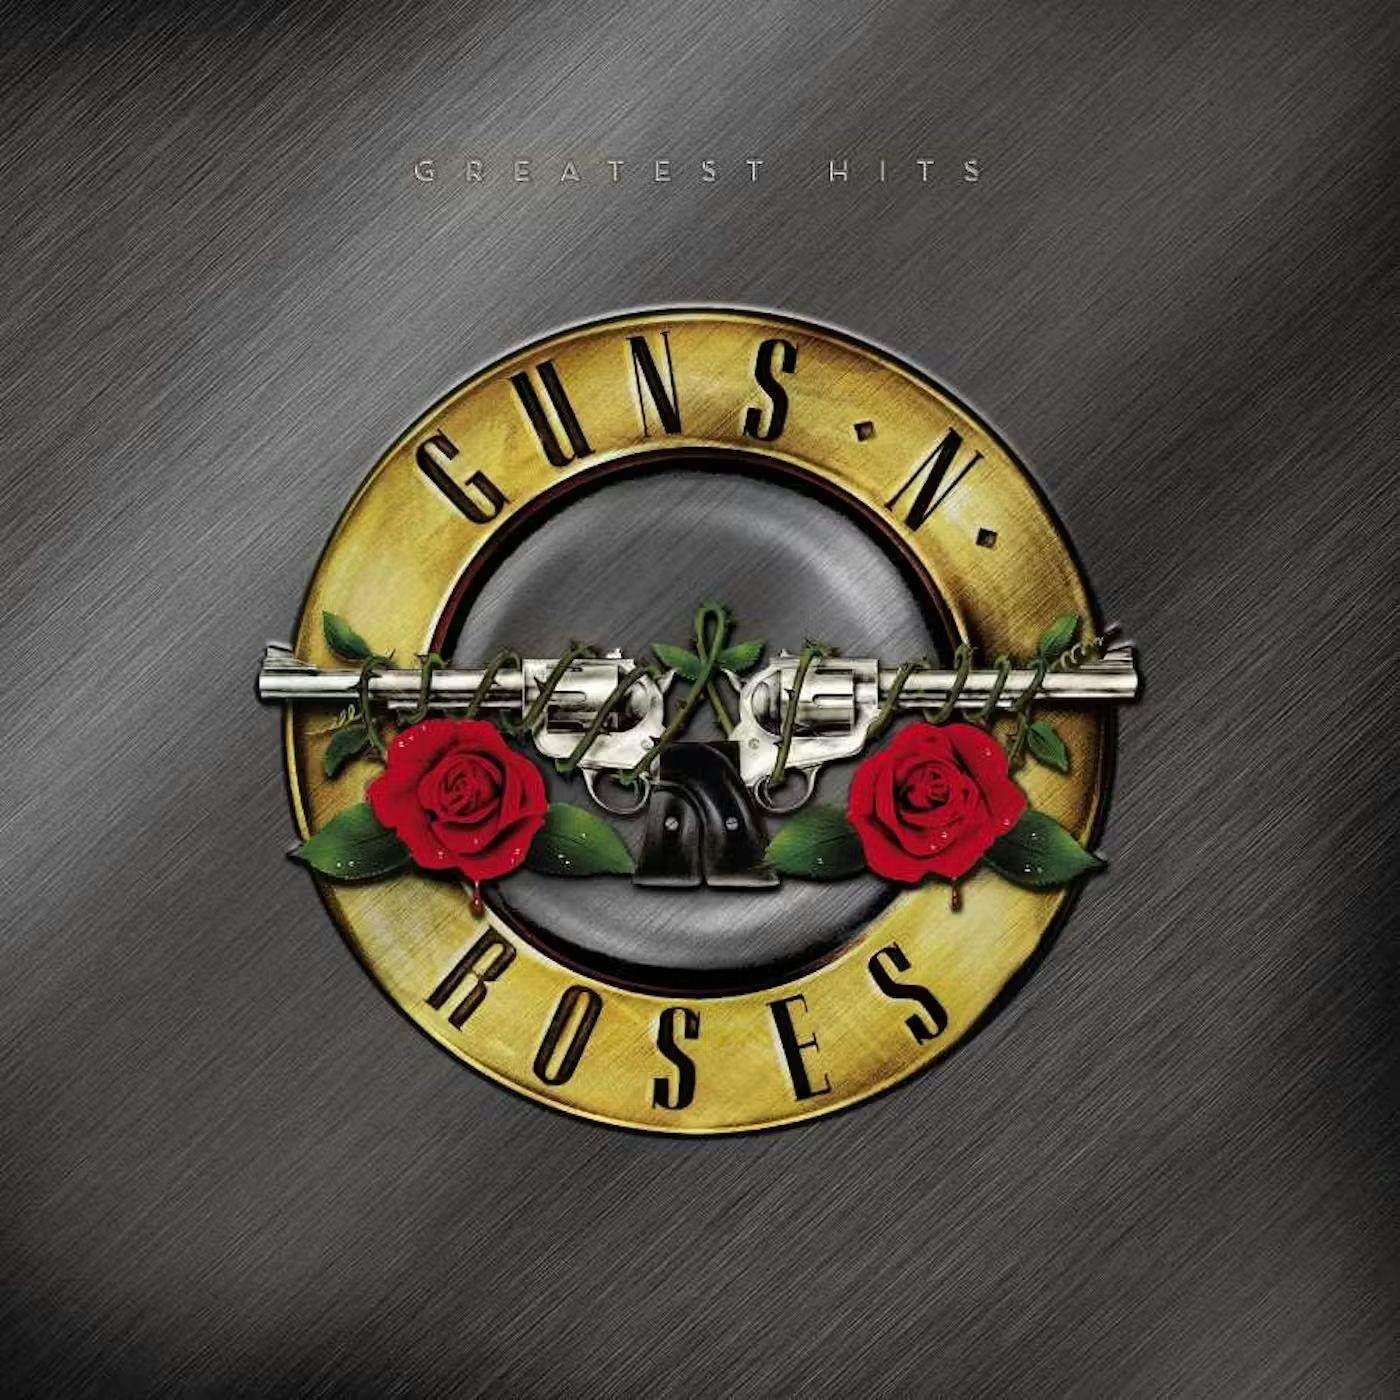 Guns N' Roses Greatest Hits (180g/2LP) Vinyl Record